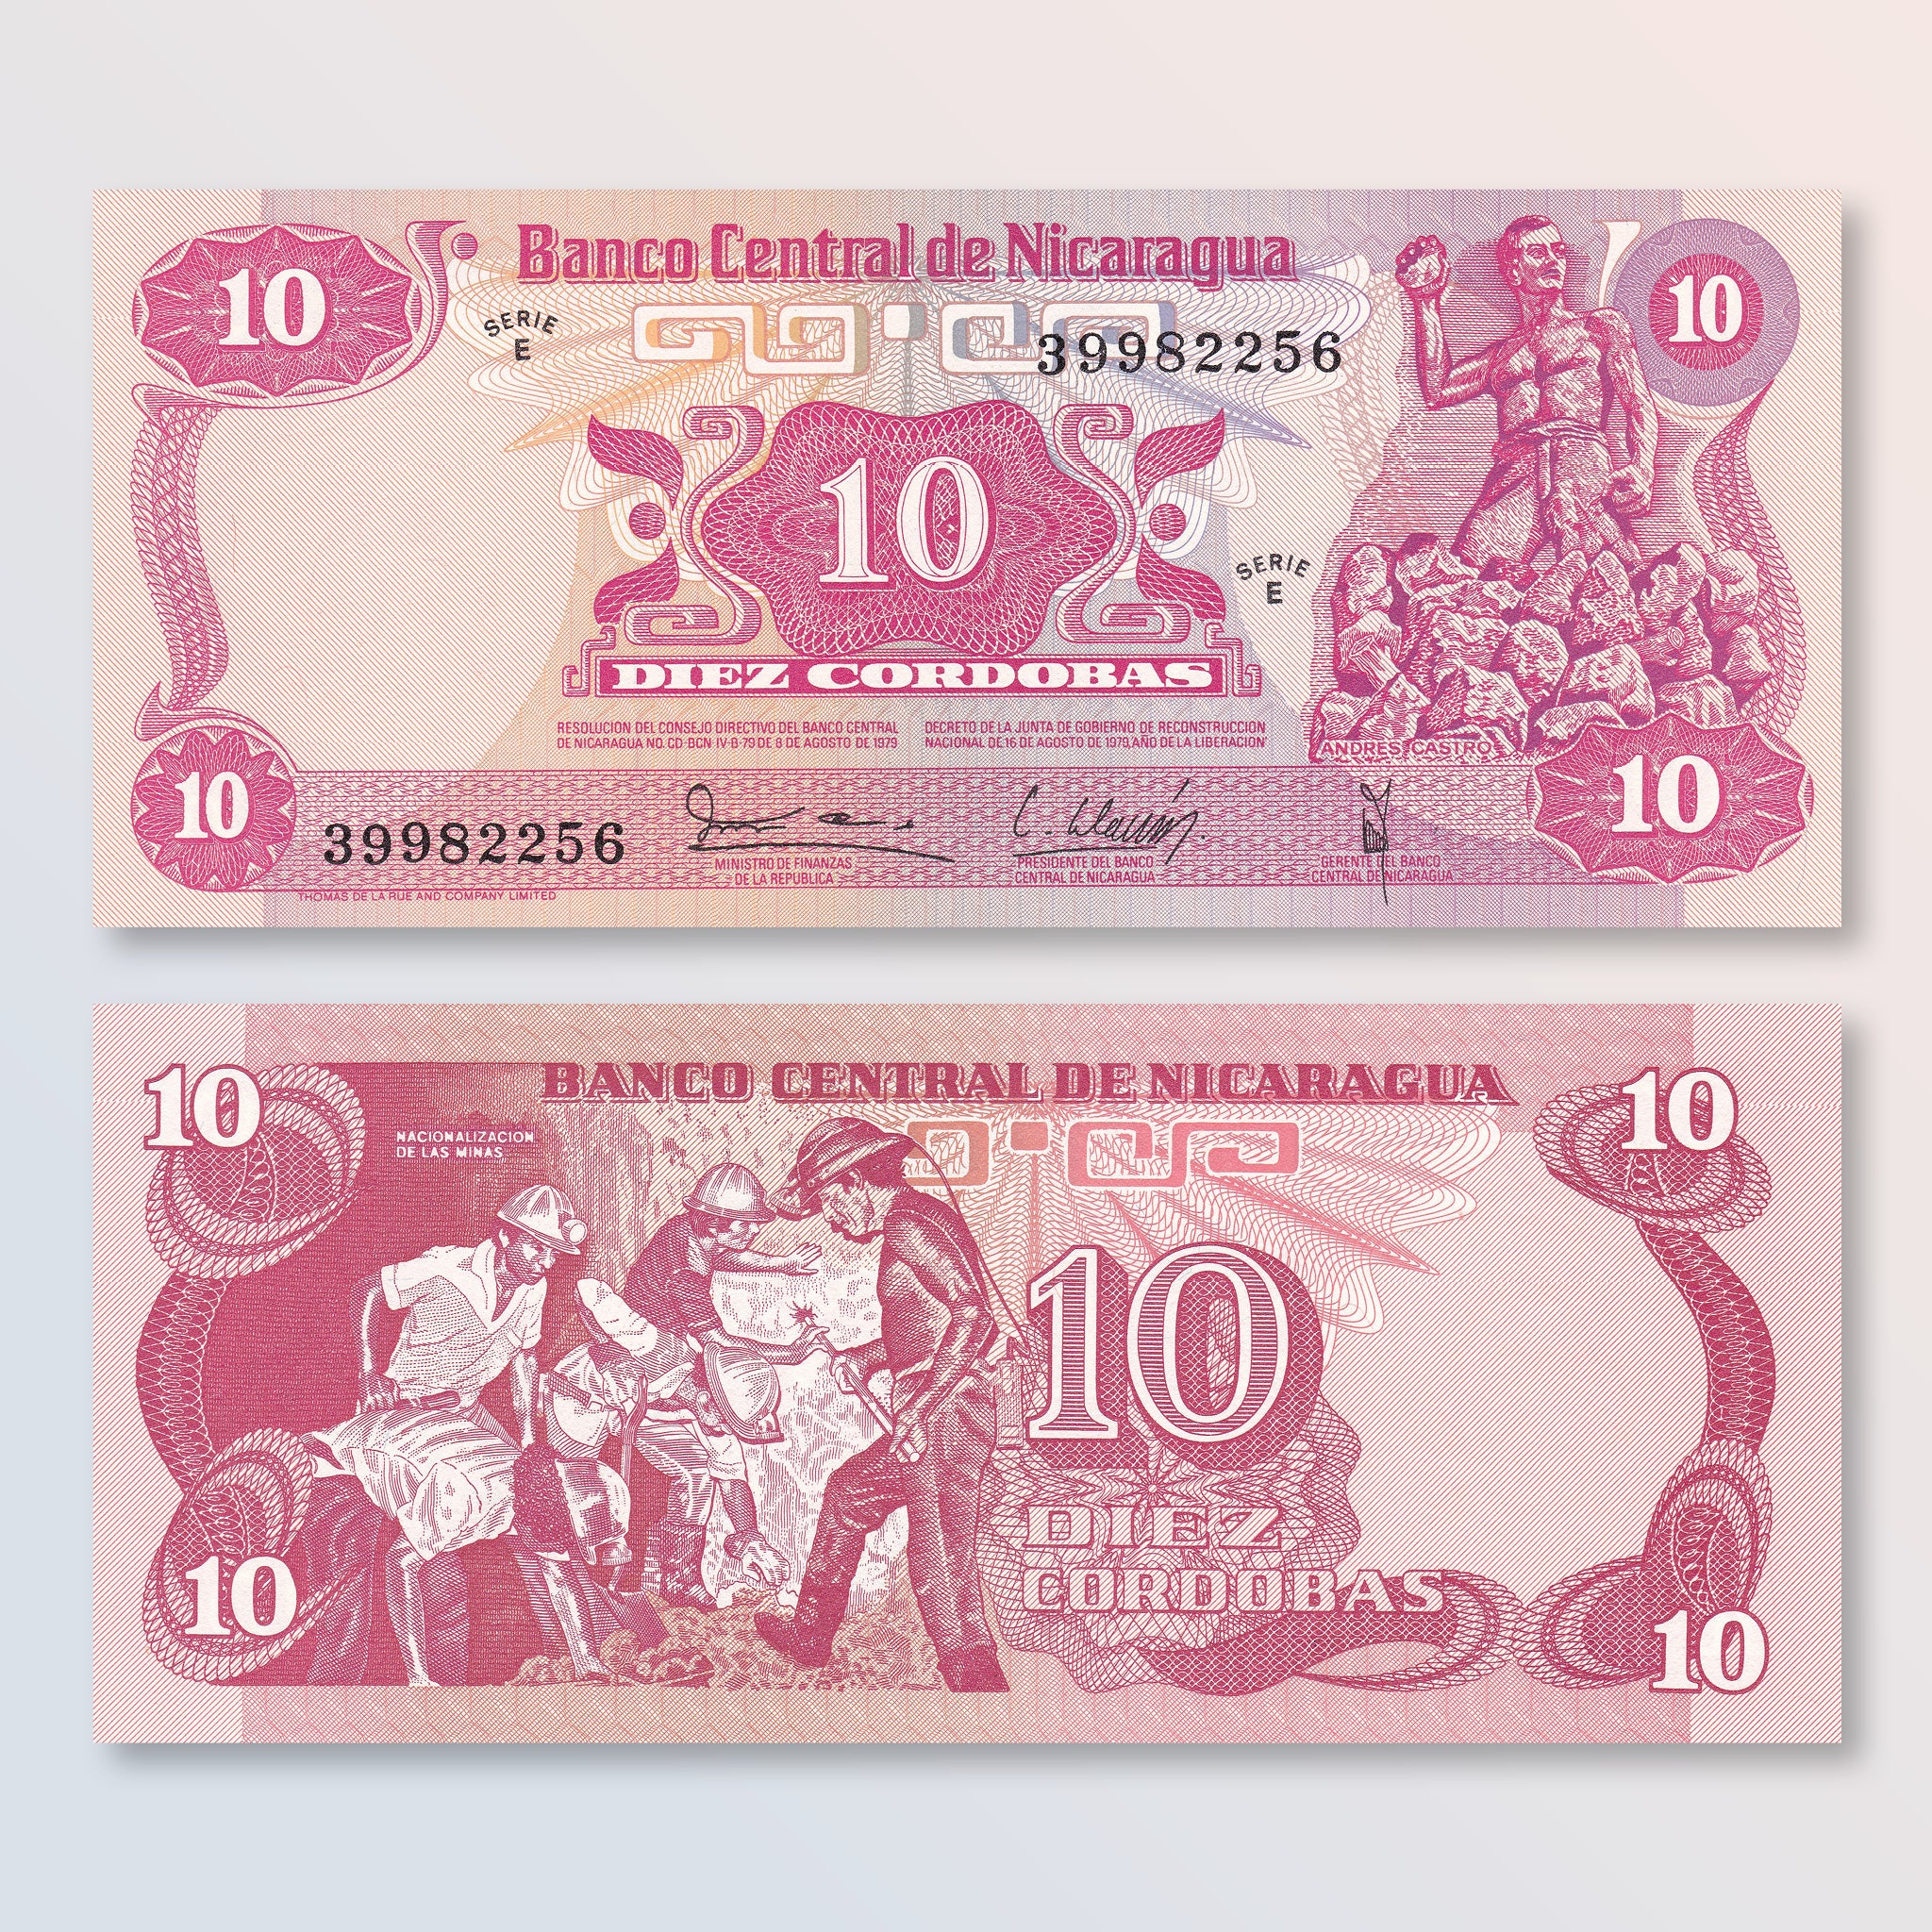 Nicaragua 10 Córdobas, 1979, B428a, P134, UNC - Robert's World Money - World Banknotes